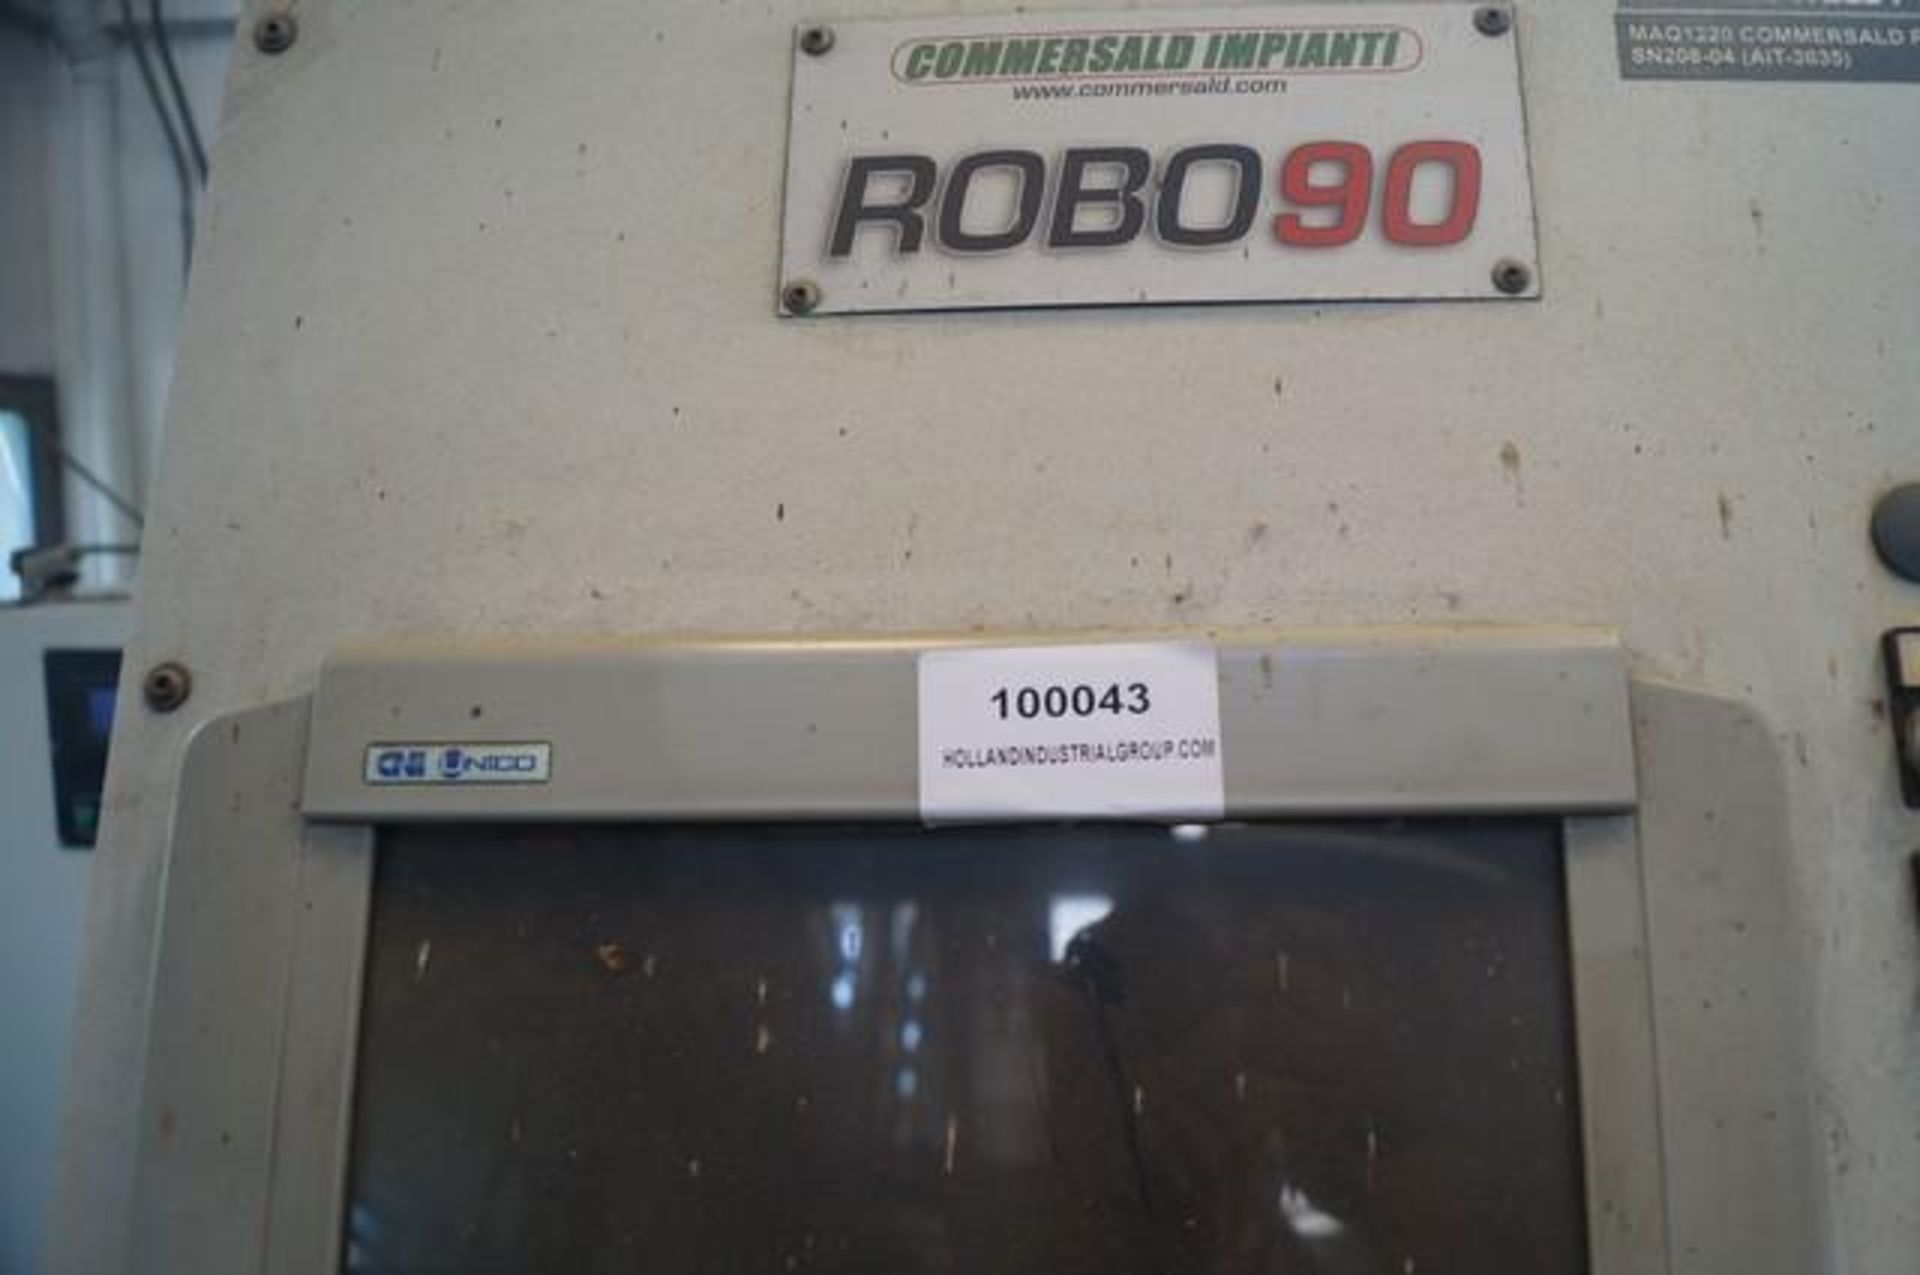 2011 COMMERSALD ROBO 90 PTA Welding System - Image 6 of 15